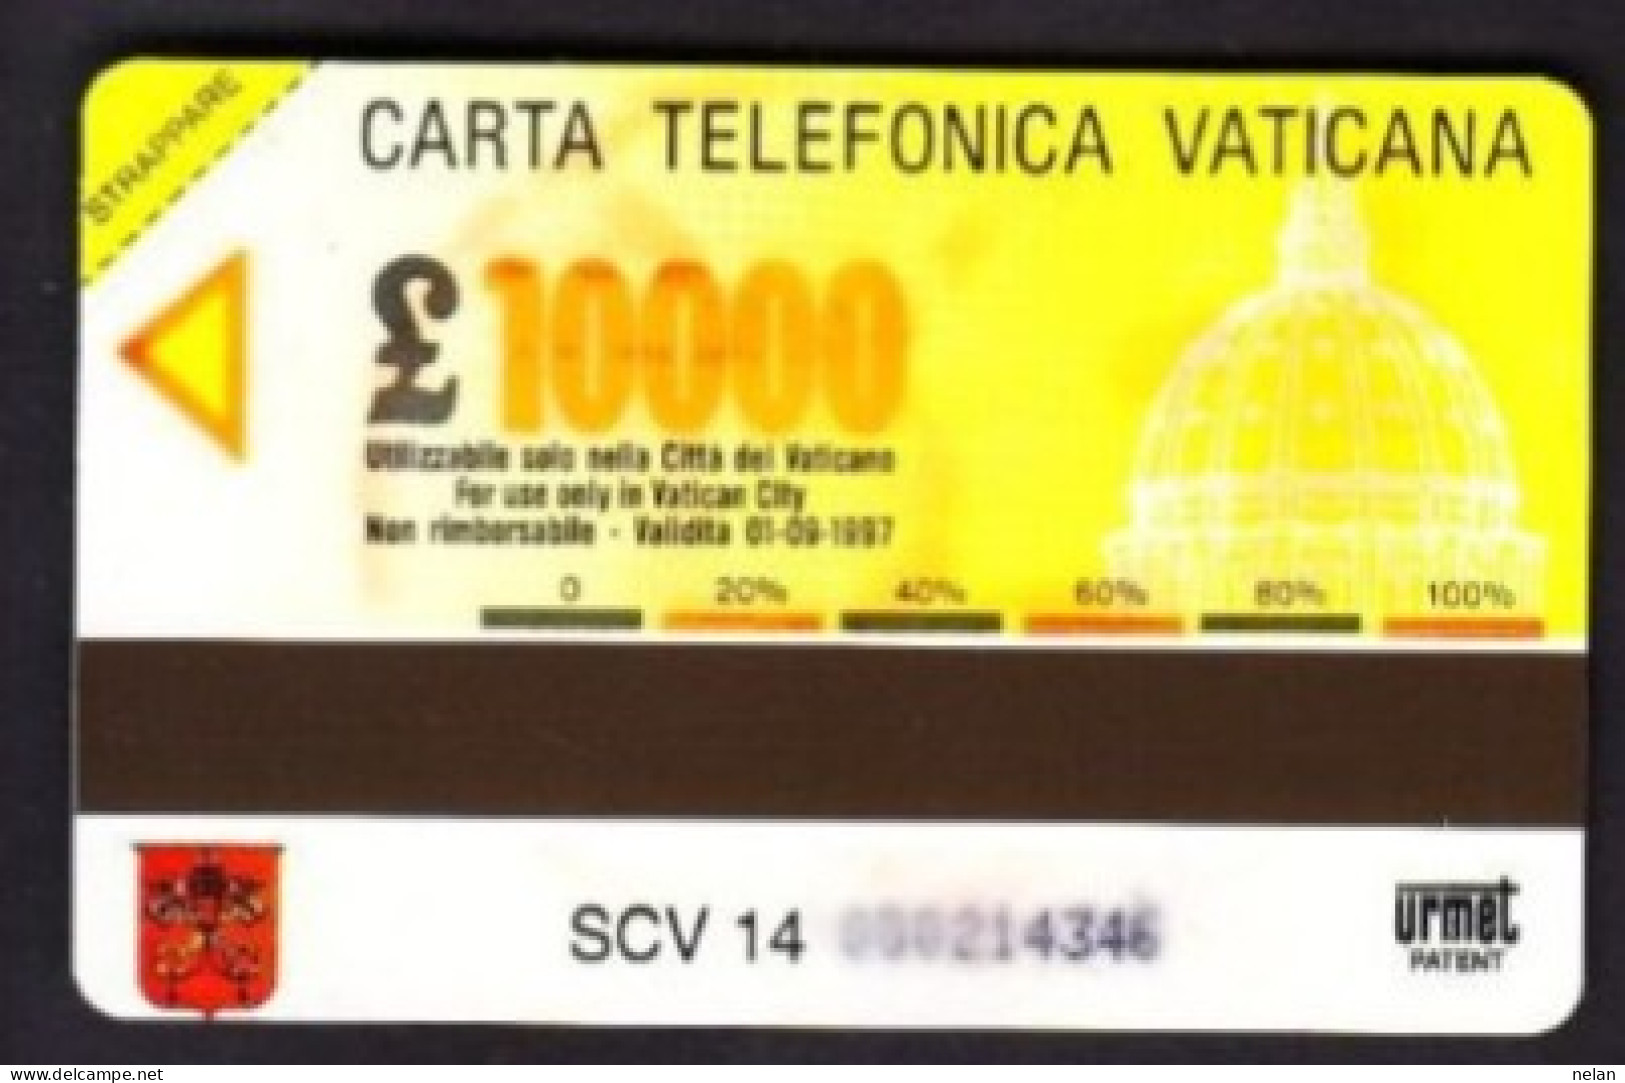 SCHEDA TELEFONICA  - ITALIA - VATICANO - URMET - NUOVA - MICROFONO MARCONI - CENTENARIO DELLA RADIO - Vatican